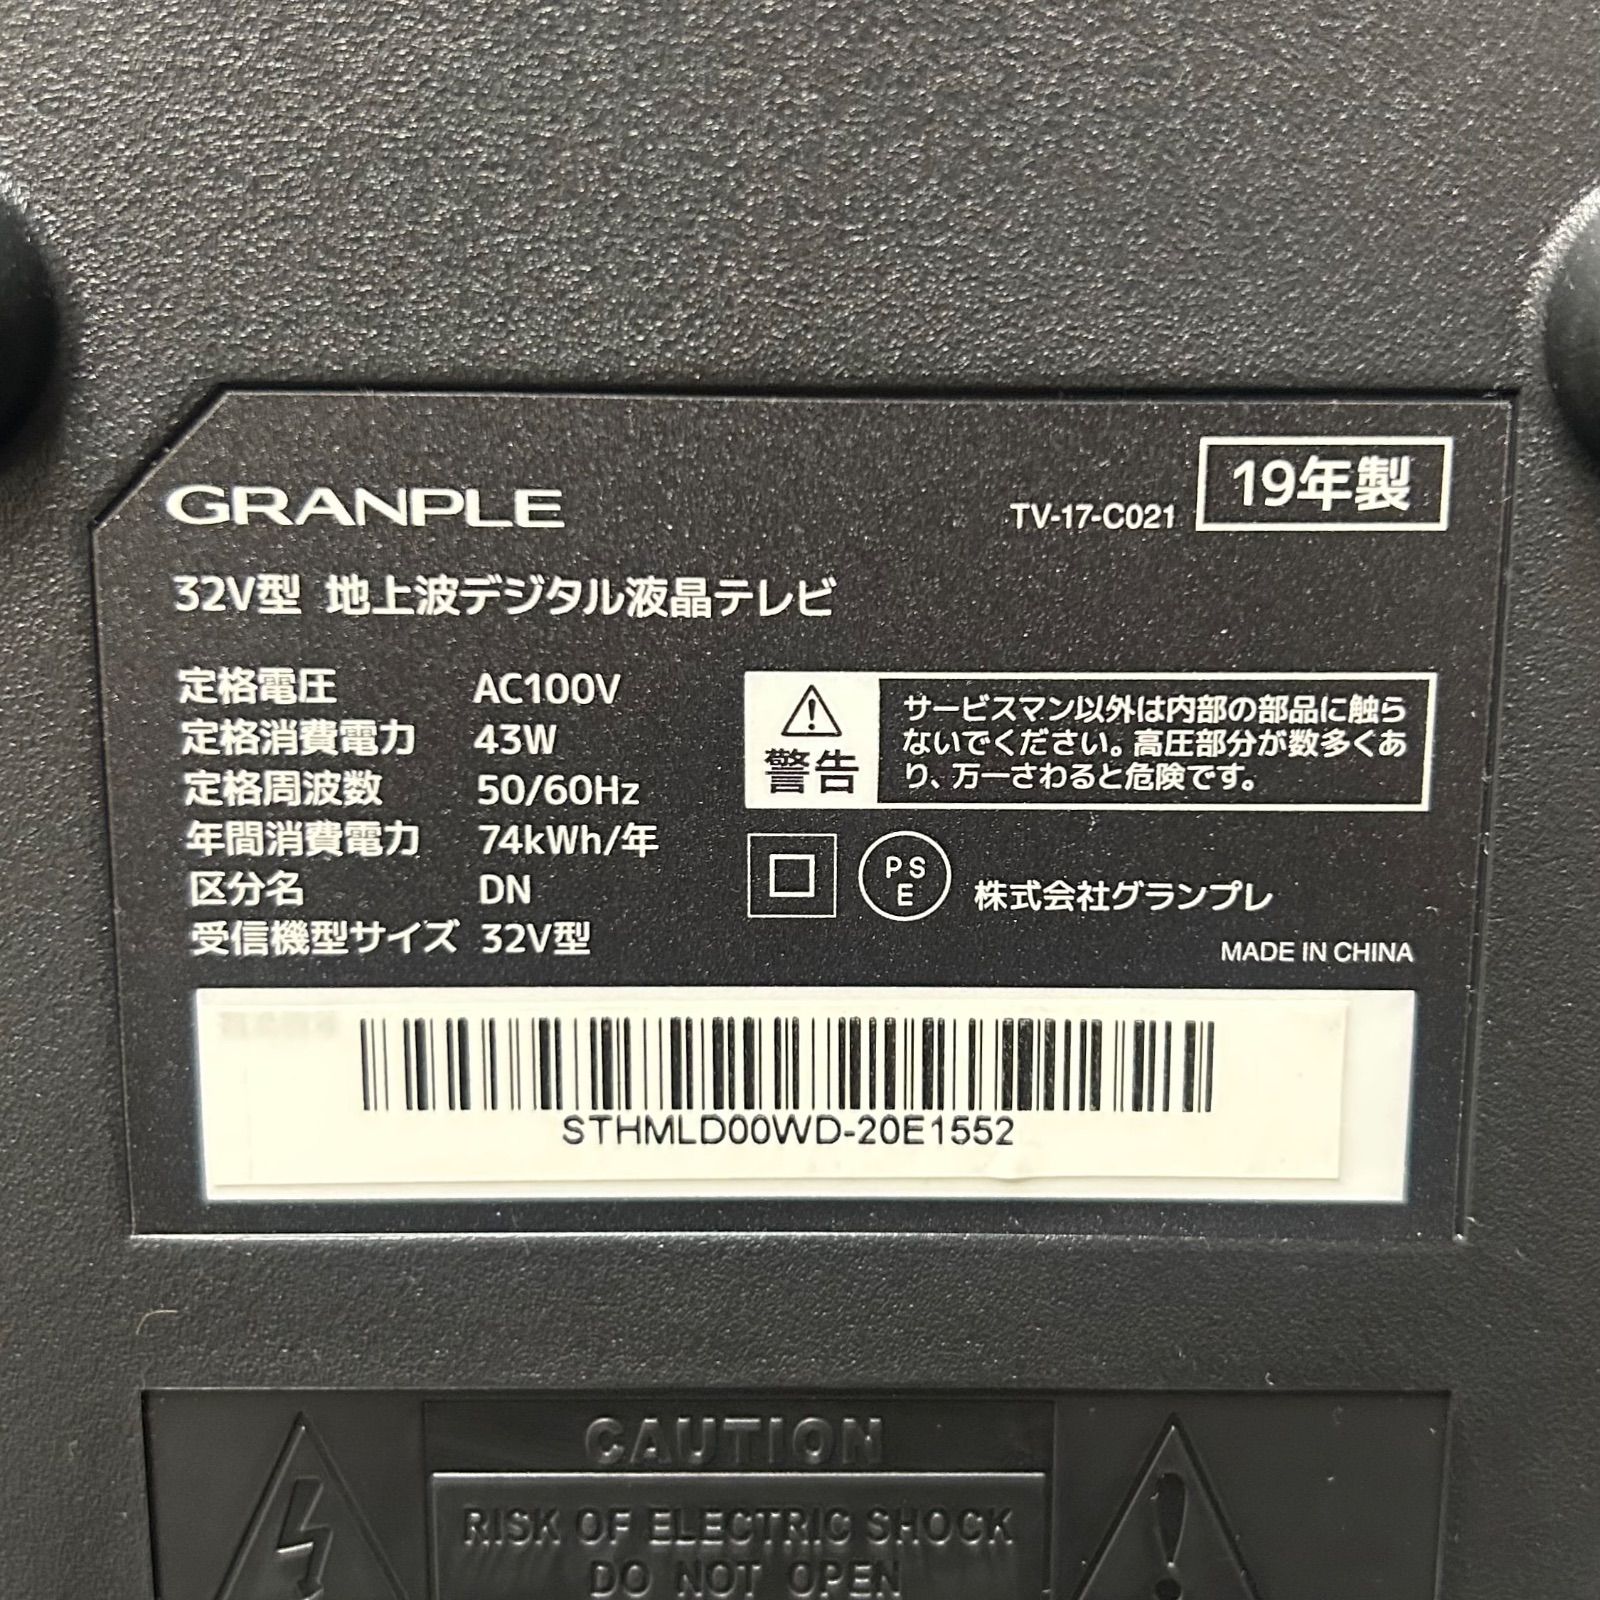 GRANPLE 32V型ハイビジョン地上波液晶テレビ GRANPLE TV-17-C011 2017年製 - 液晶テレビ